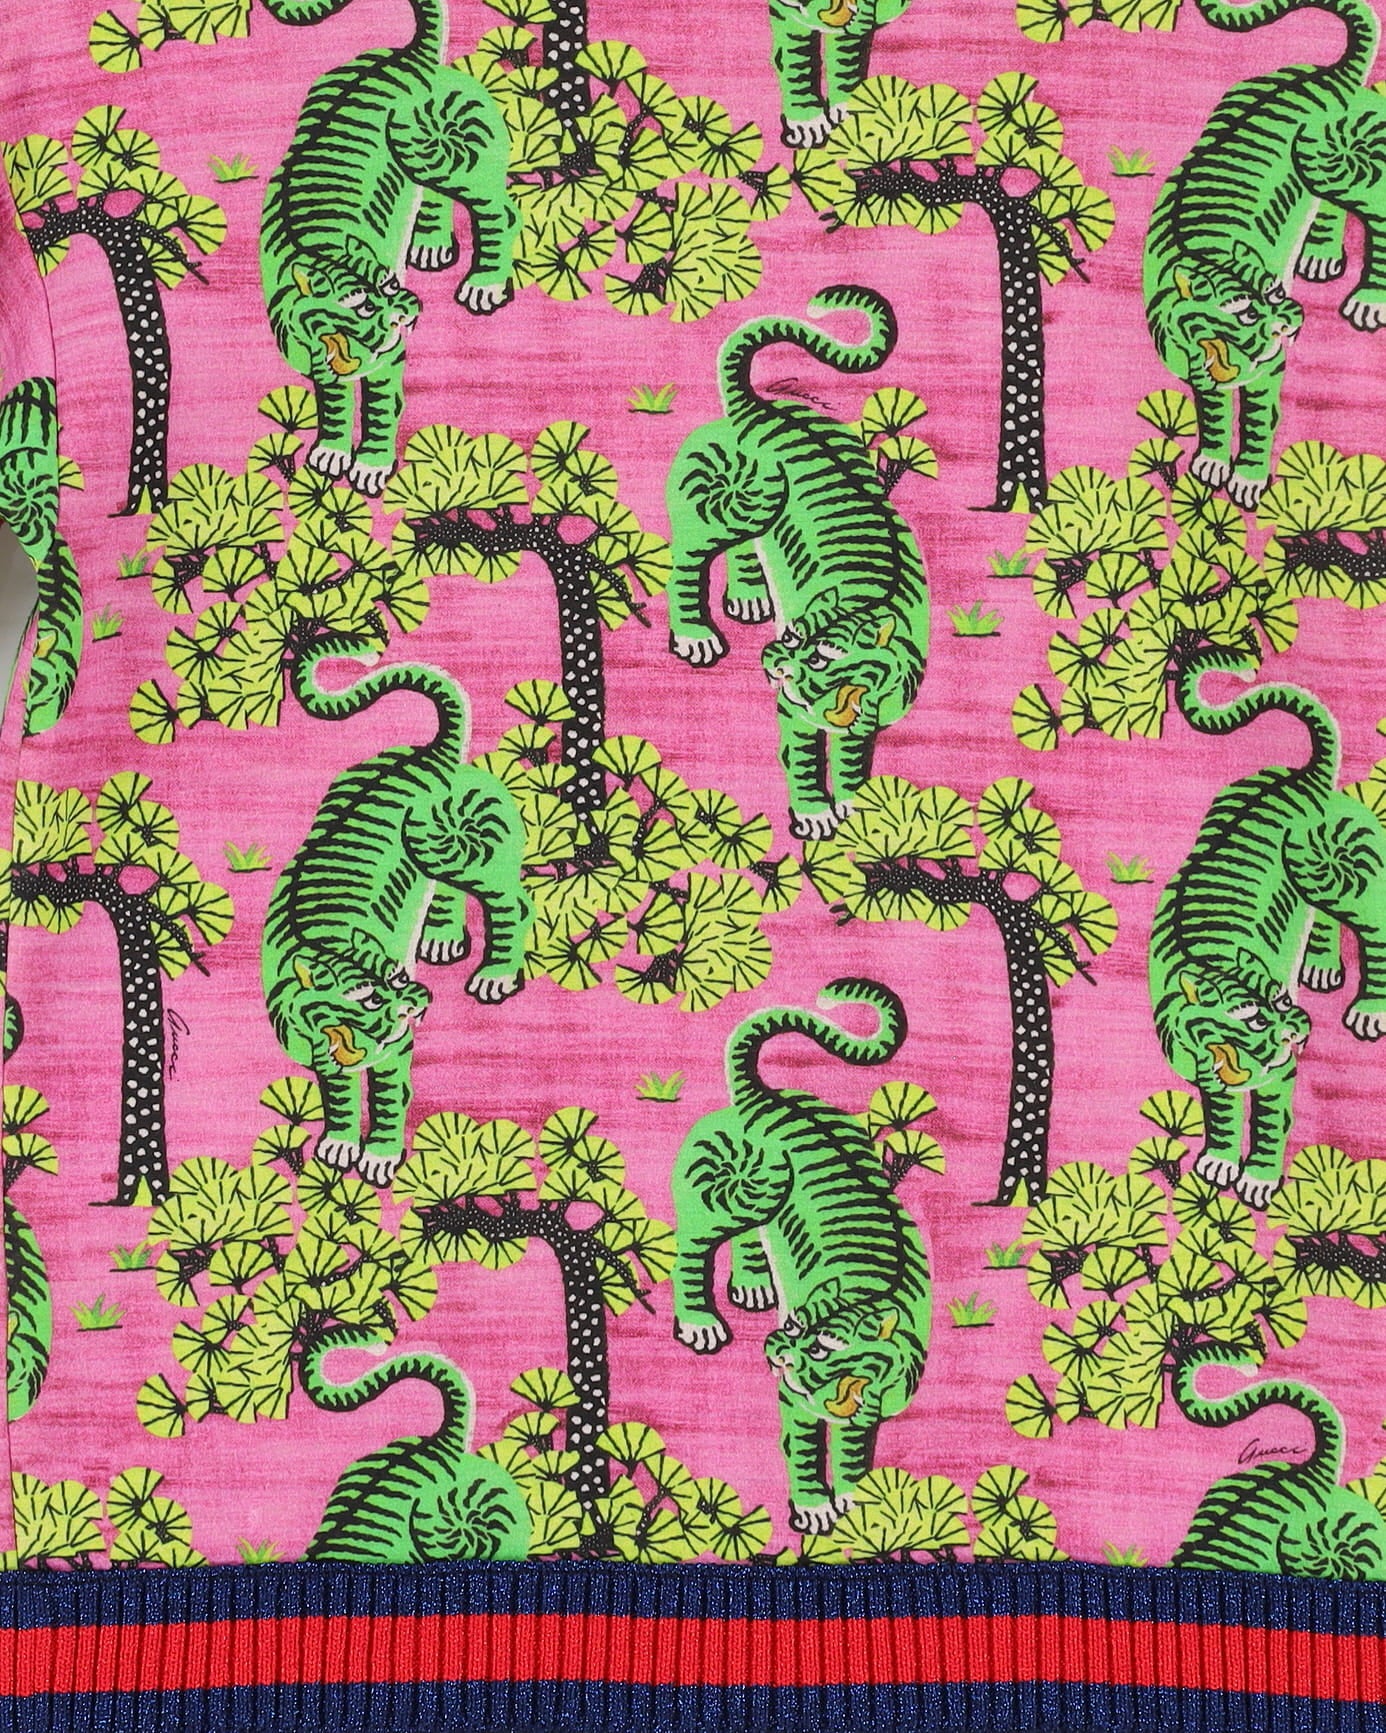 Gucci Pink All Over Tiger Design Short Sleeve Sweatshirt - XXS